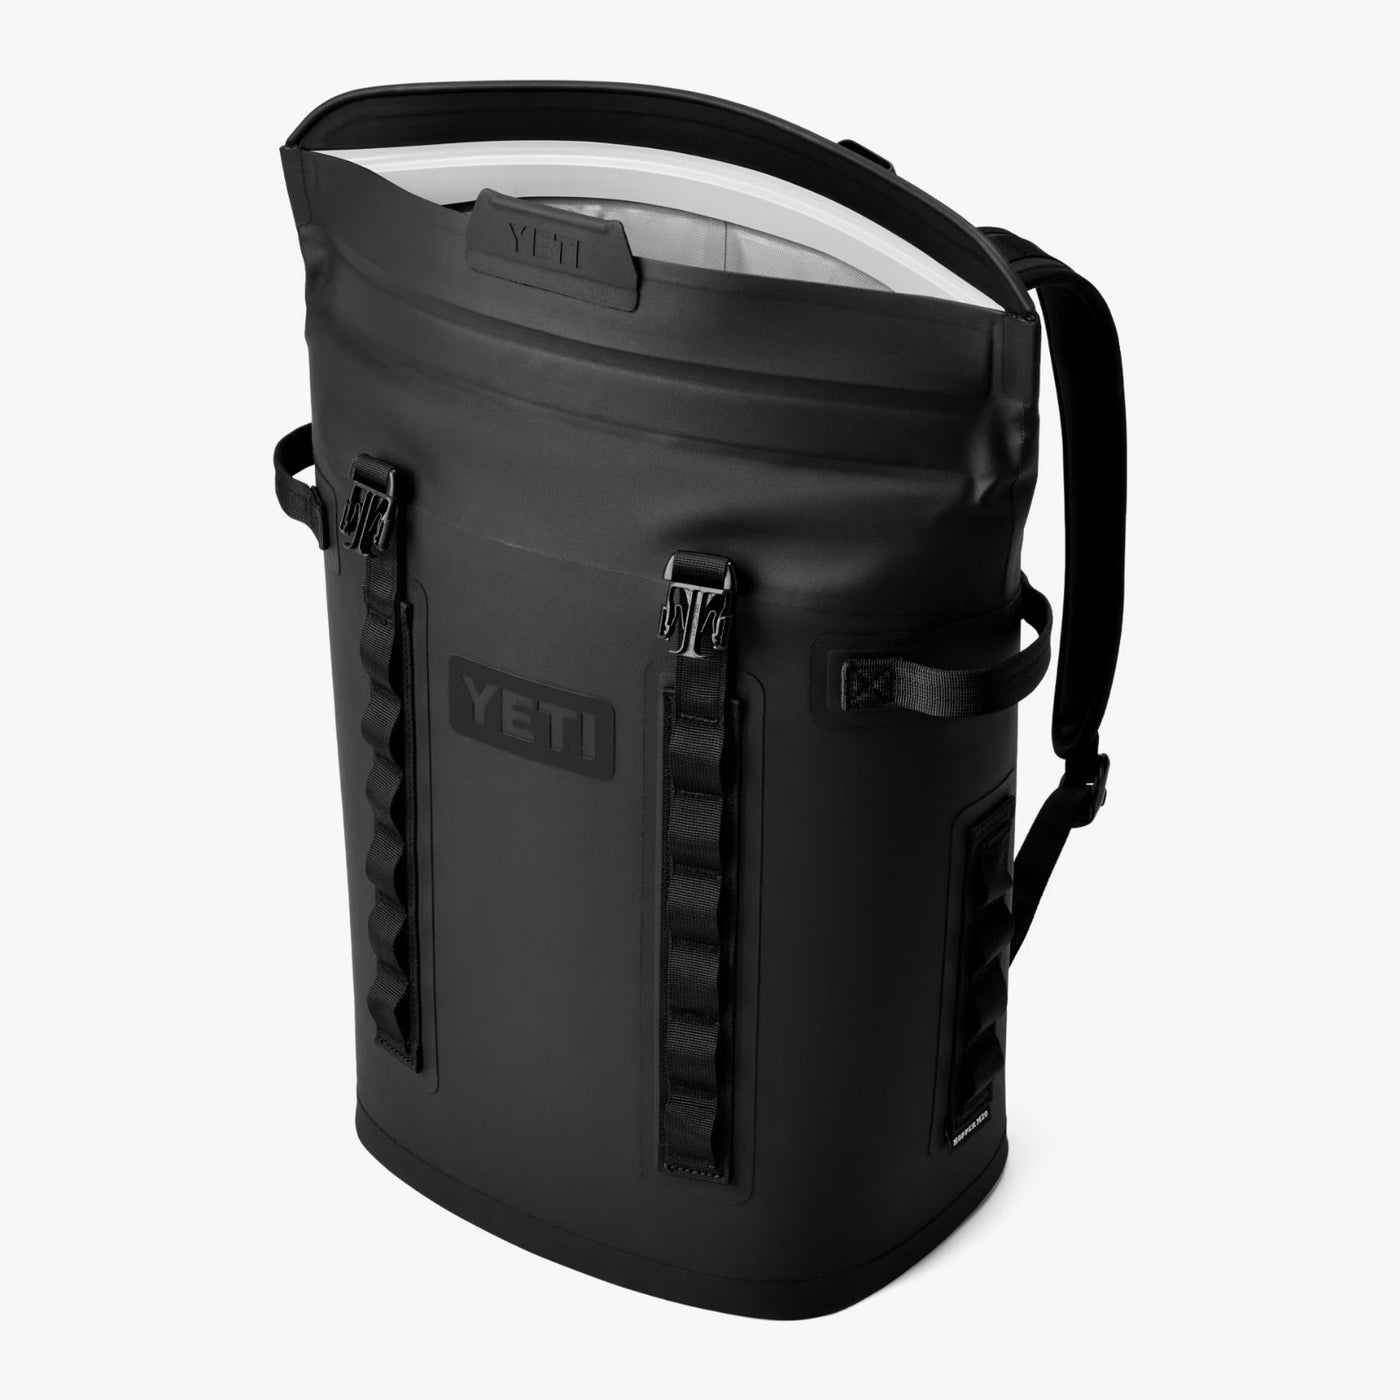 Yeti Hopper M20 Soft Backpack Cooler - Black